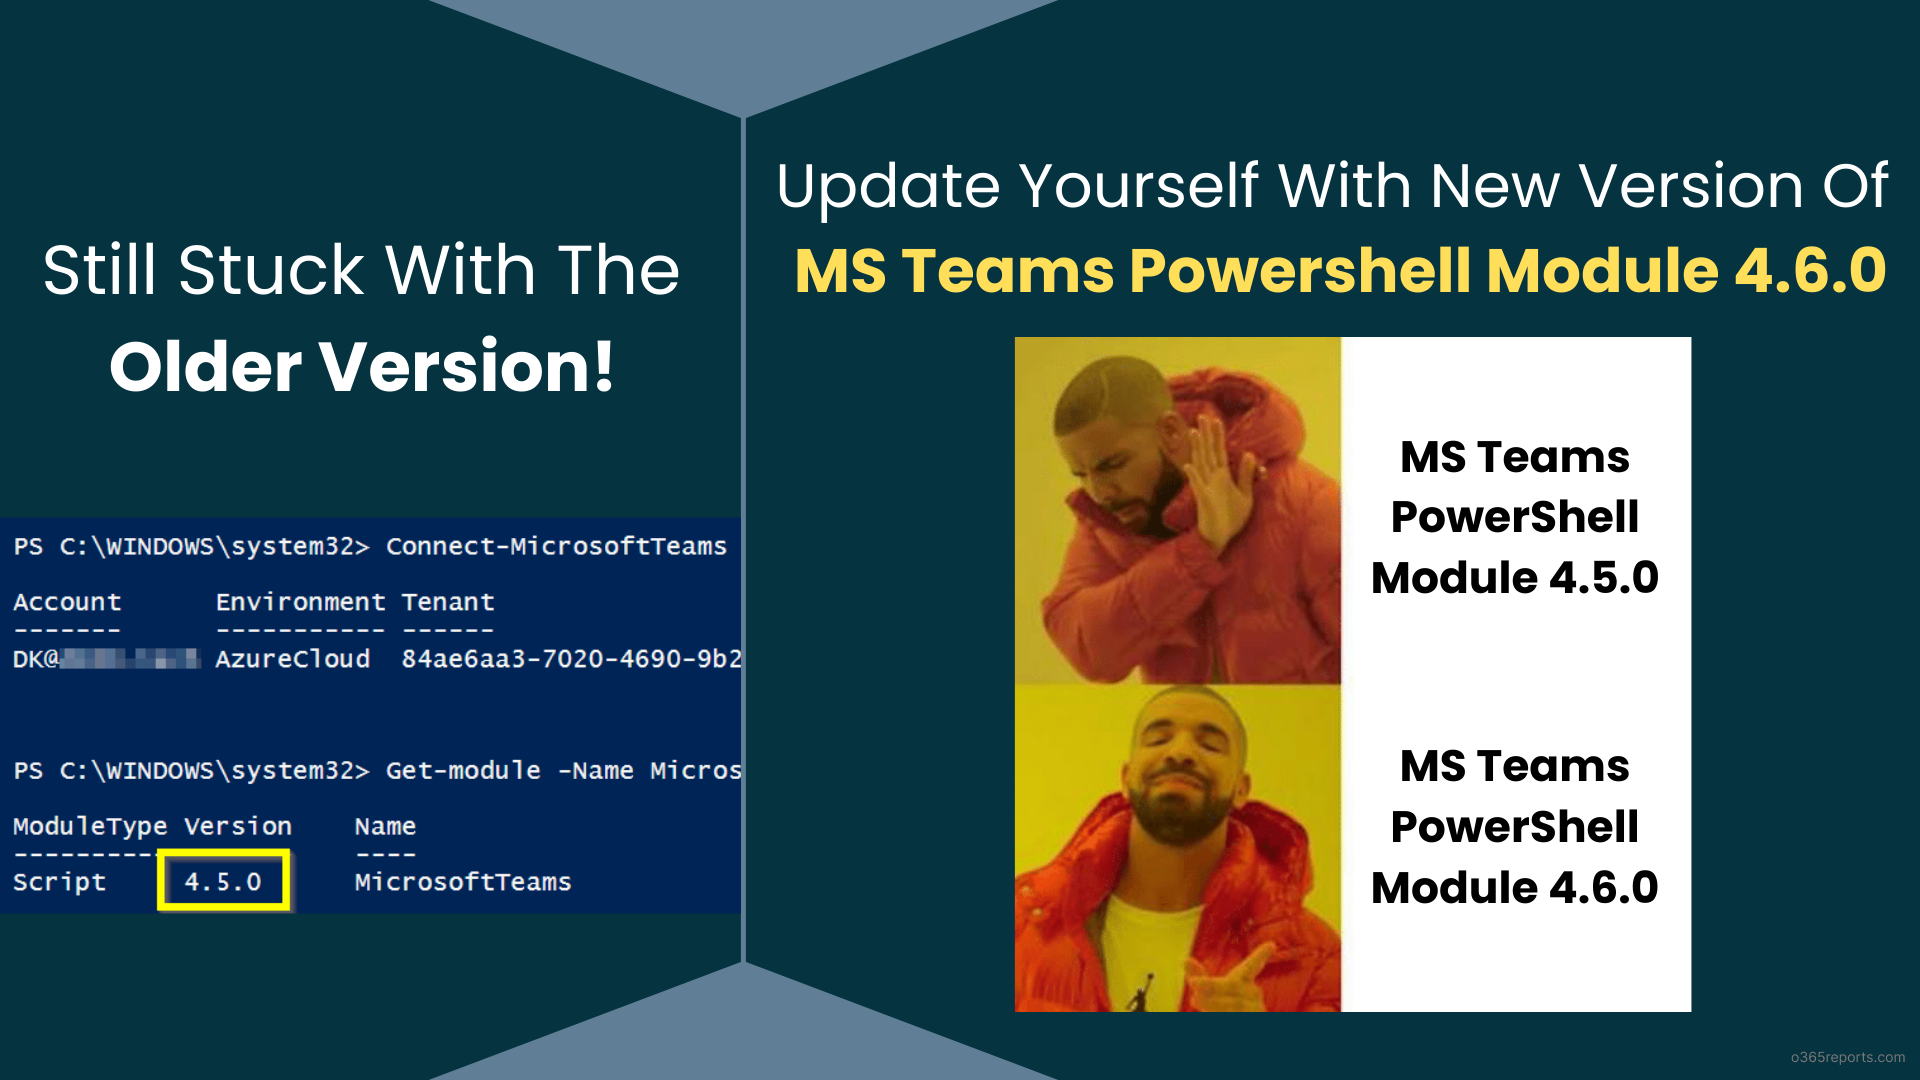 MS Teams PowerShell 4.6.0